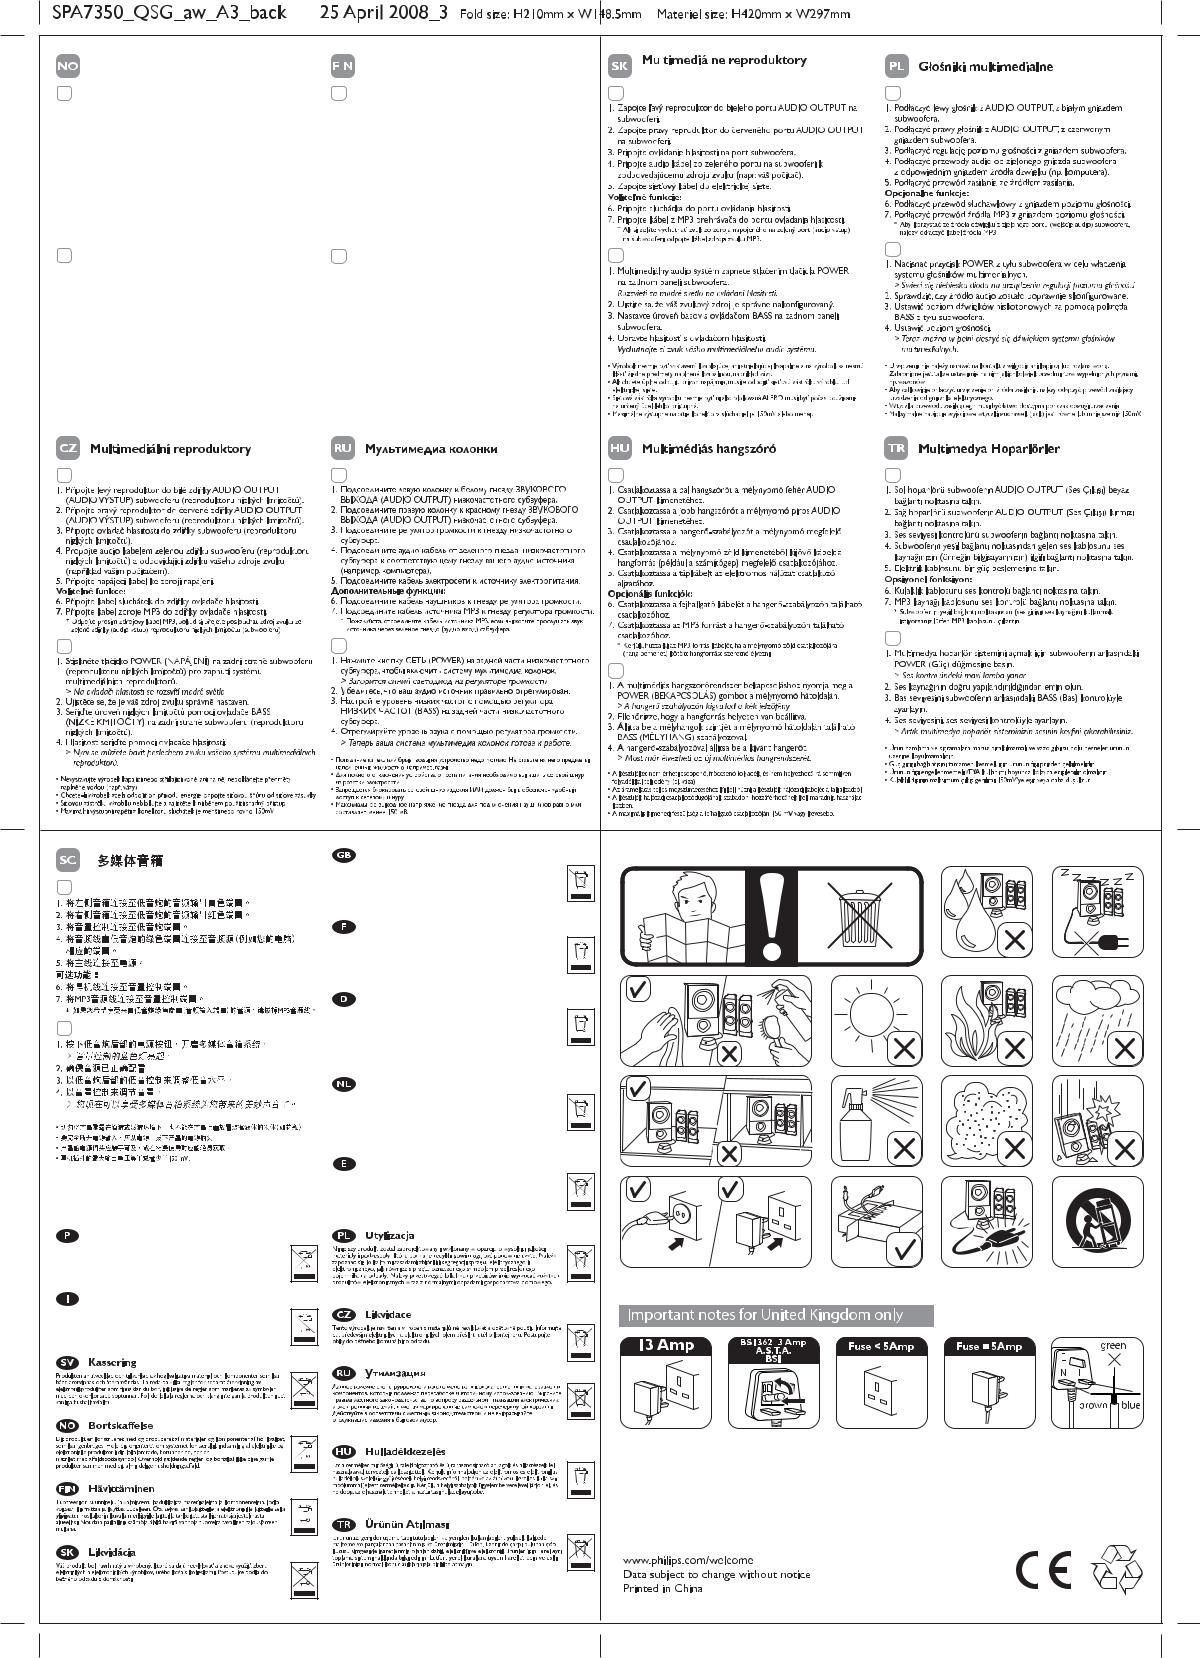 PHILIPS SPA 7350 User Manual